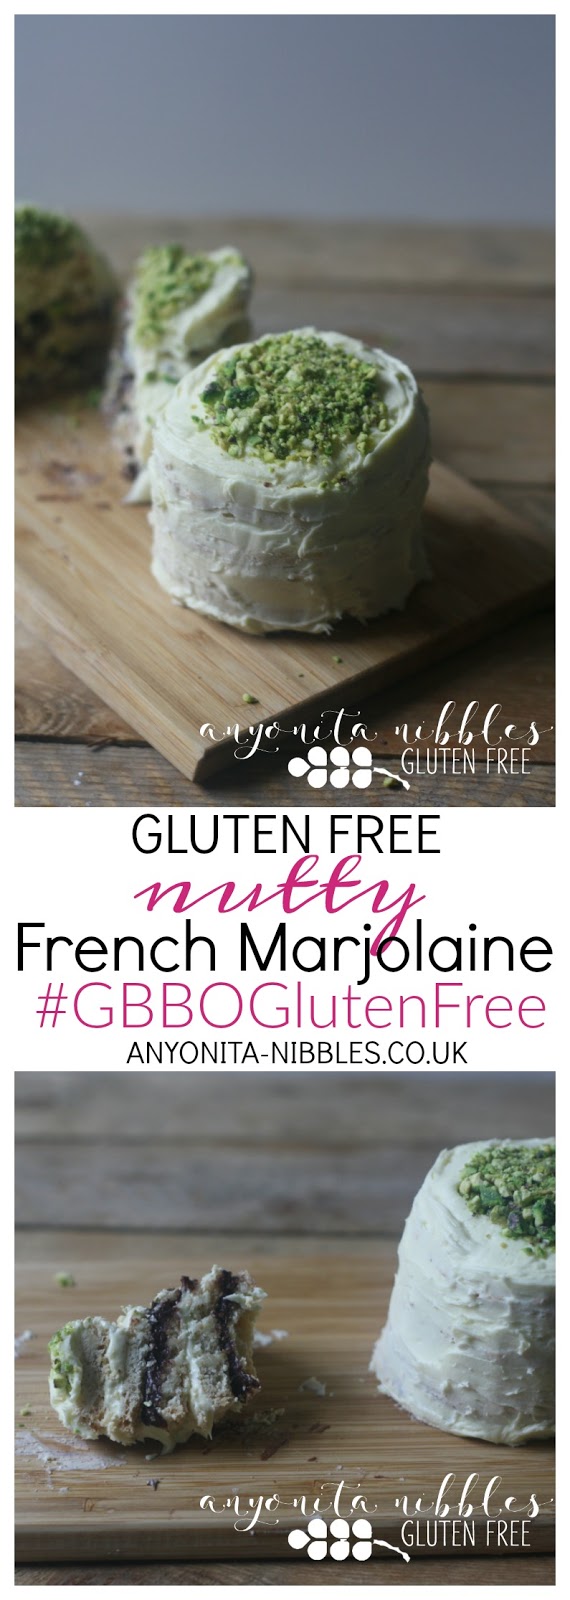 Gluten Free French Marjolaine - #GBBOGlutenFree | Anyonita Nibbles